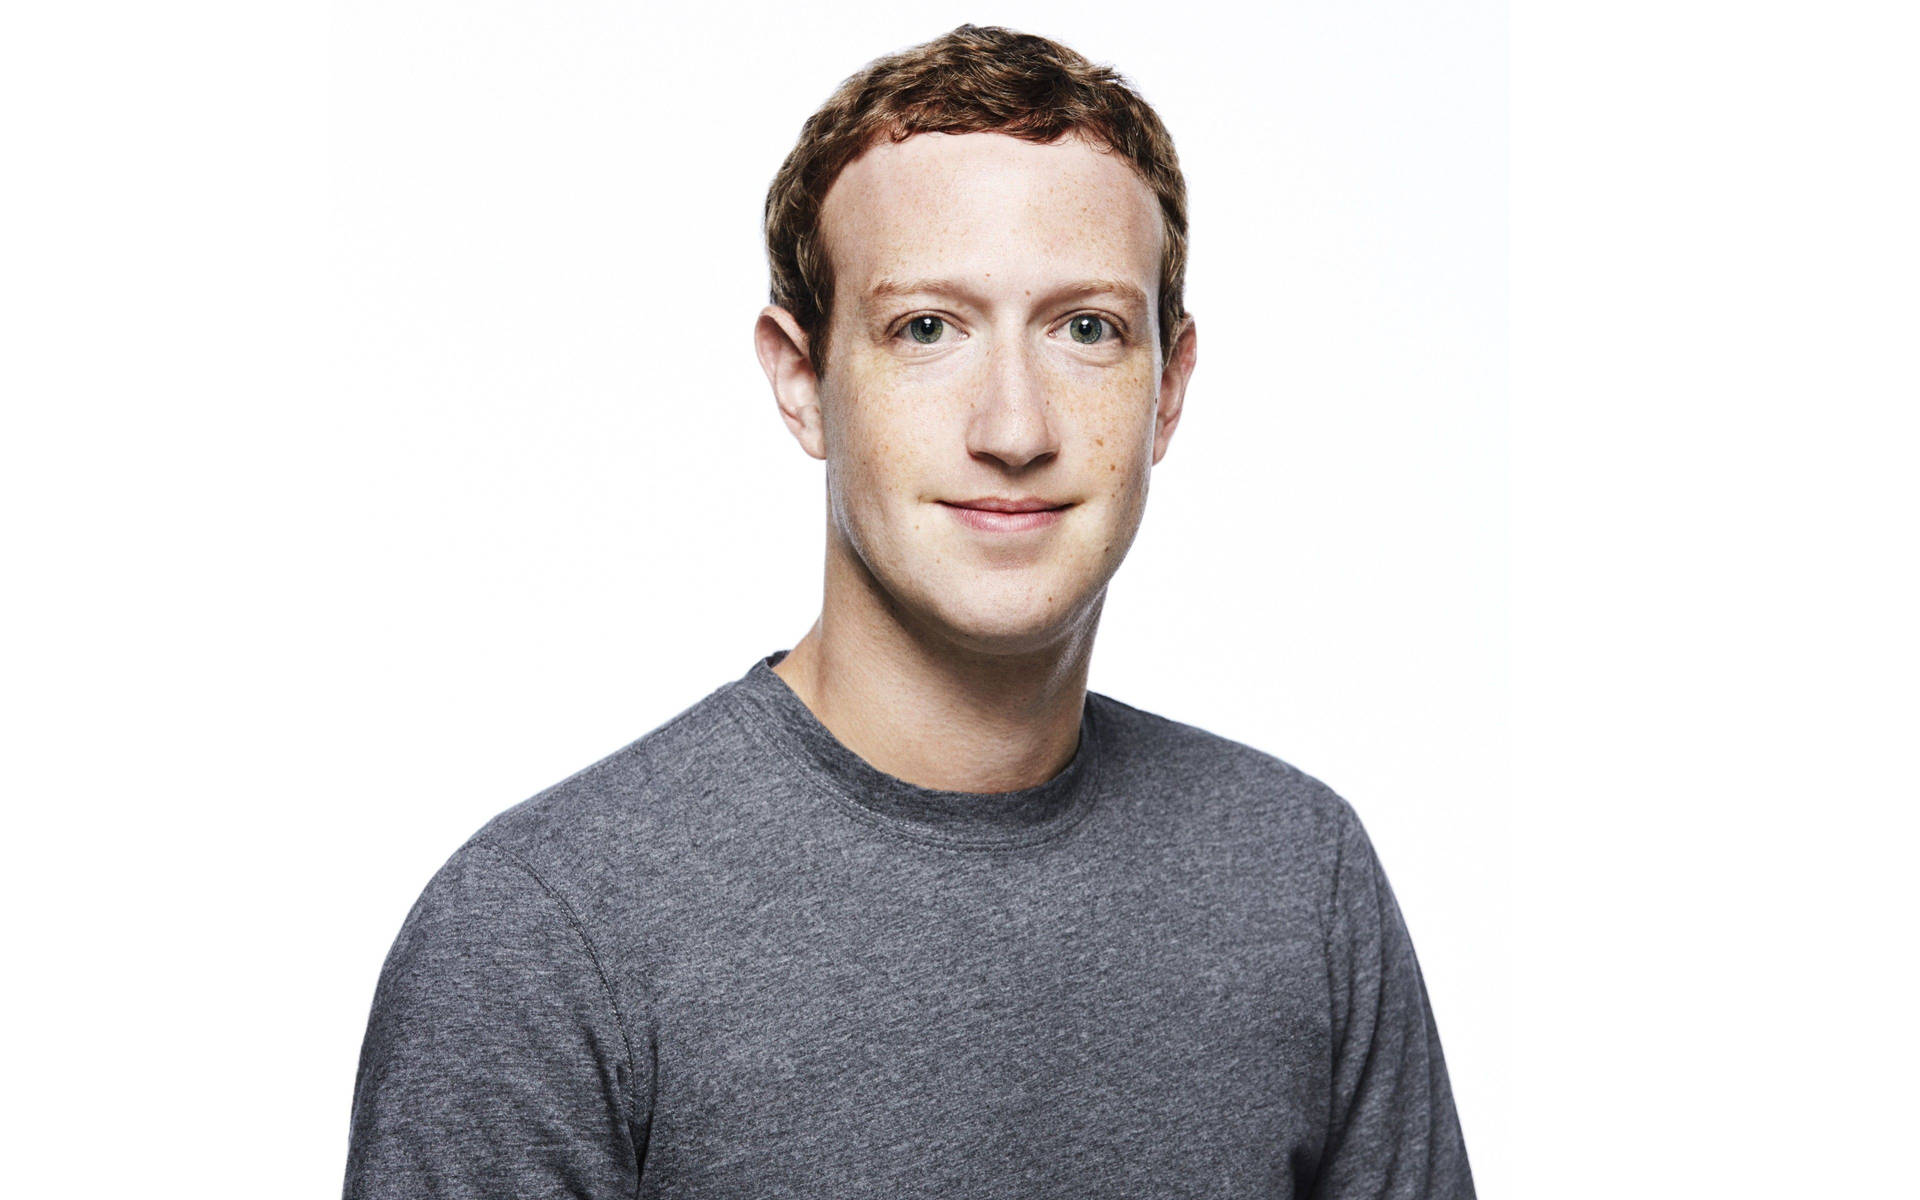 Mark Zuckerberg Wallpaper Images